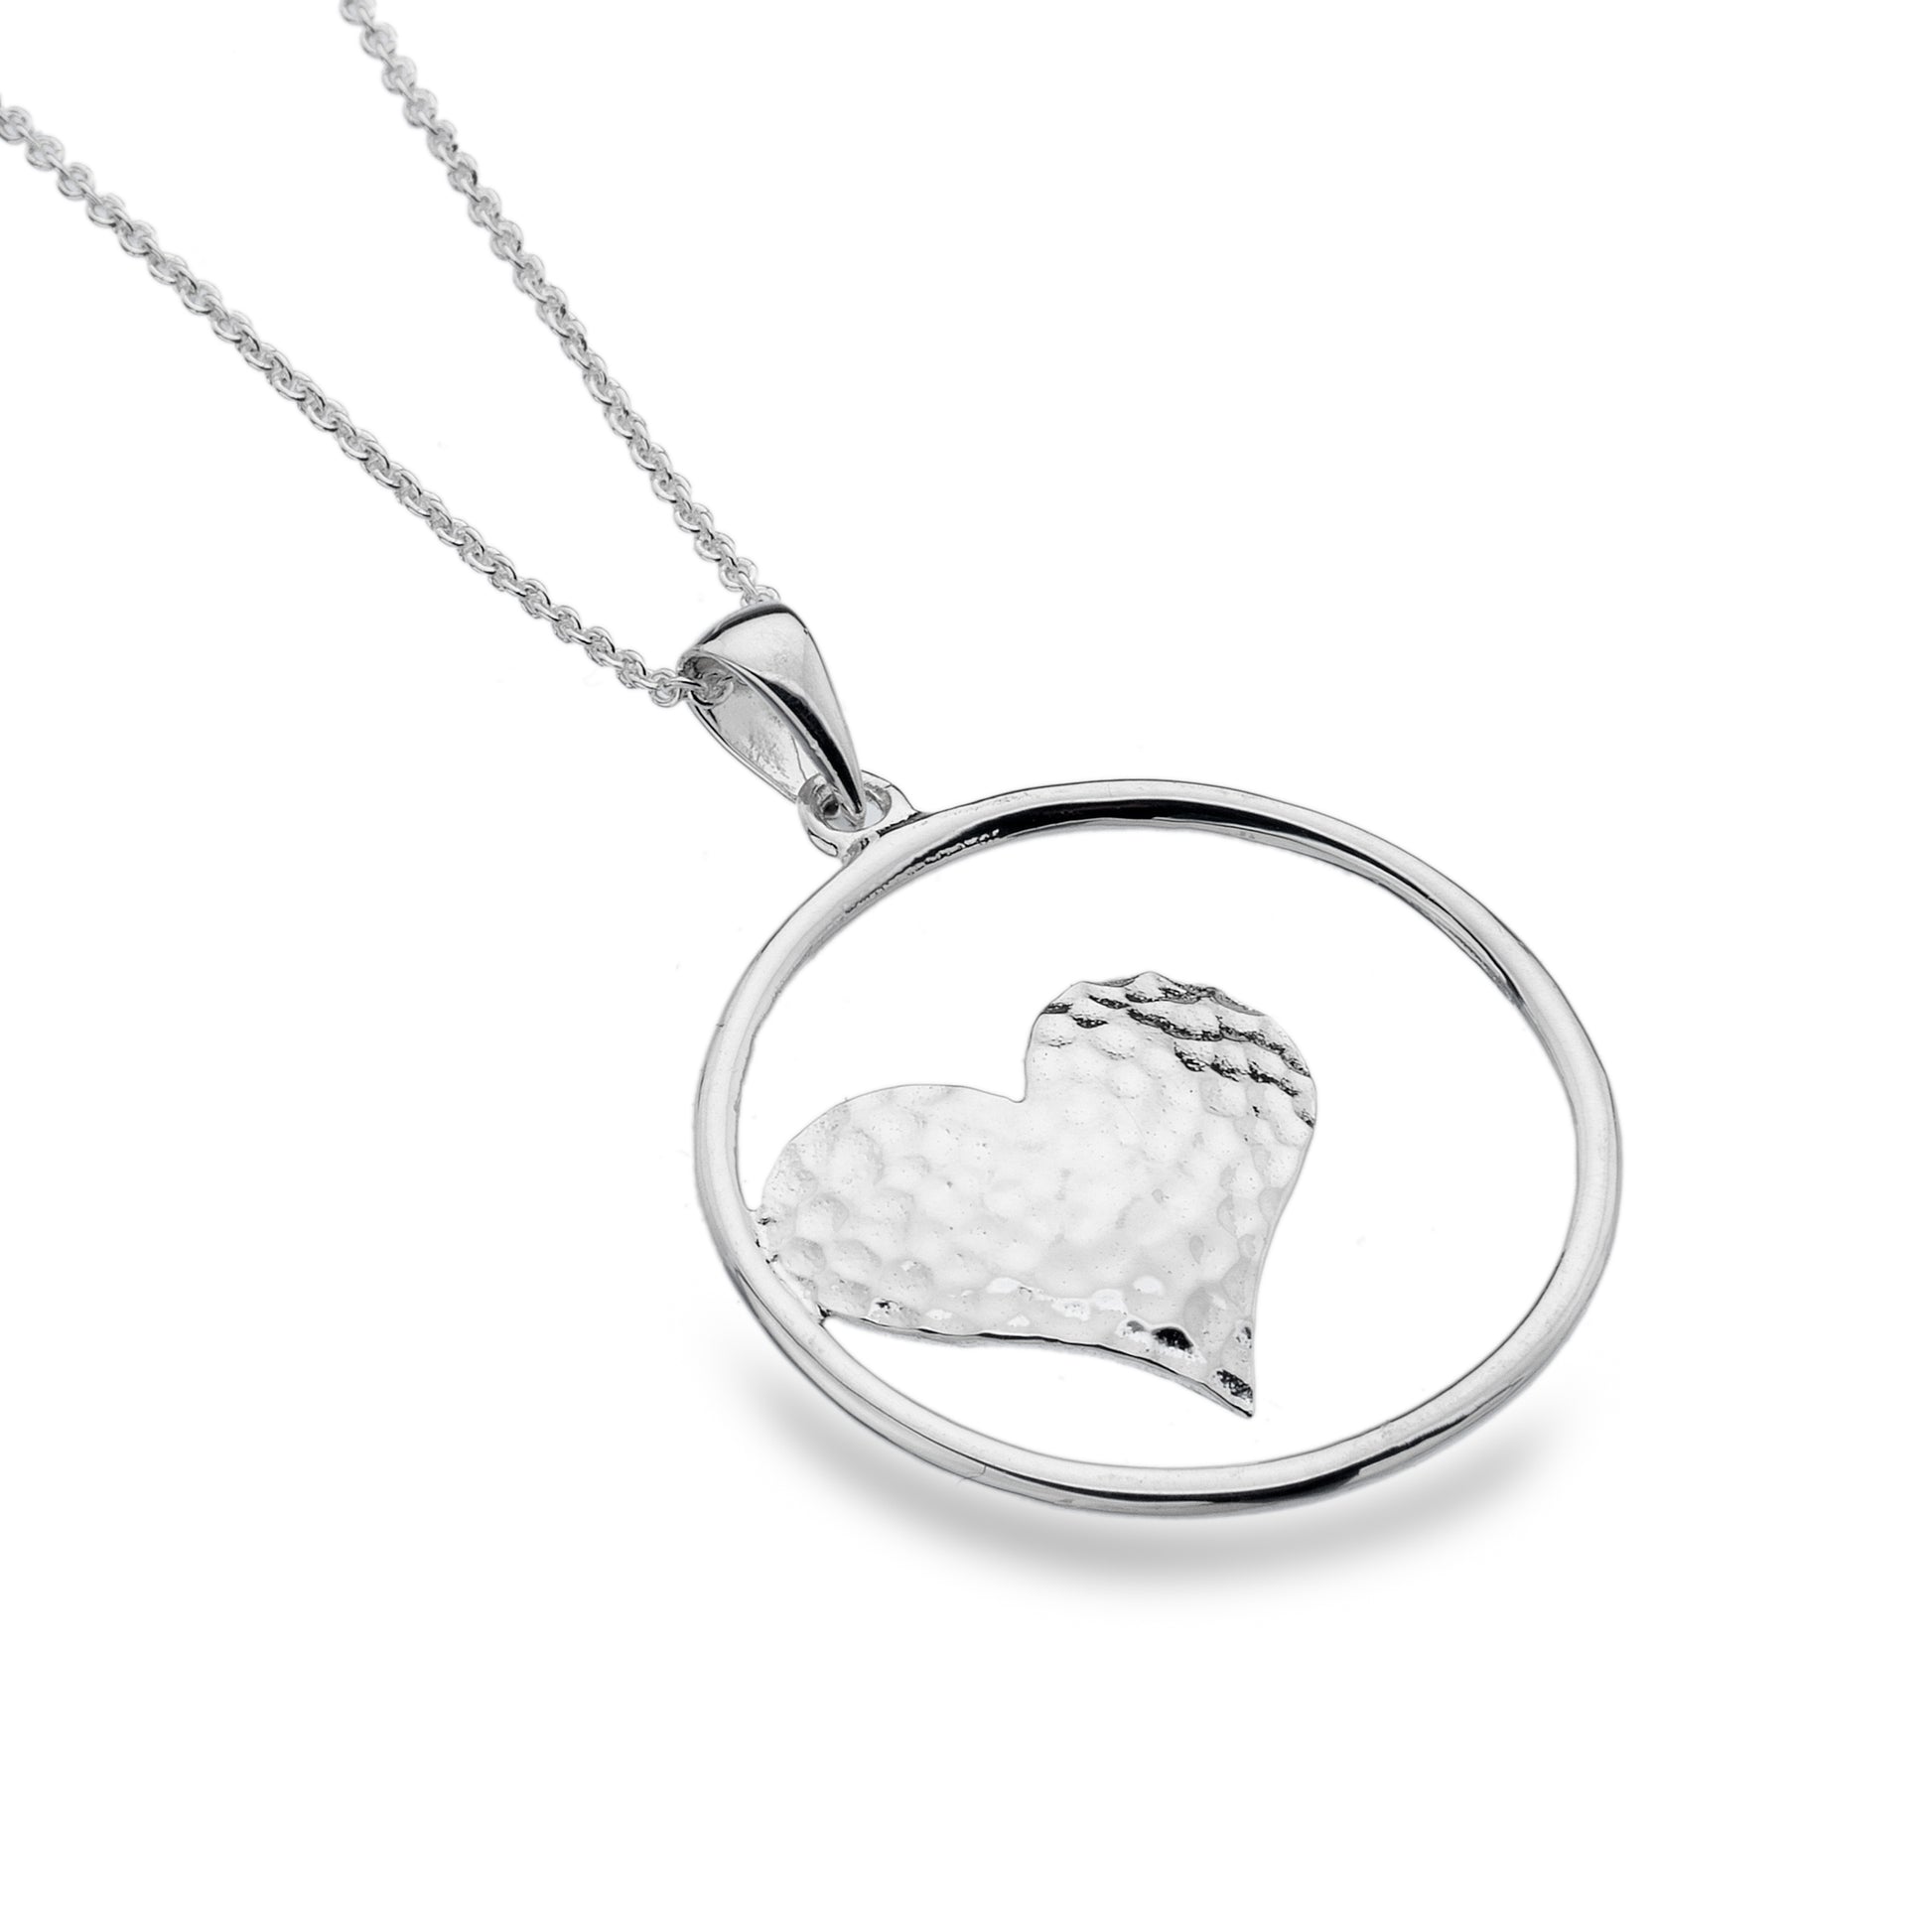 Sea Gems enclosed heart pendant